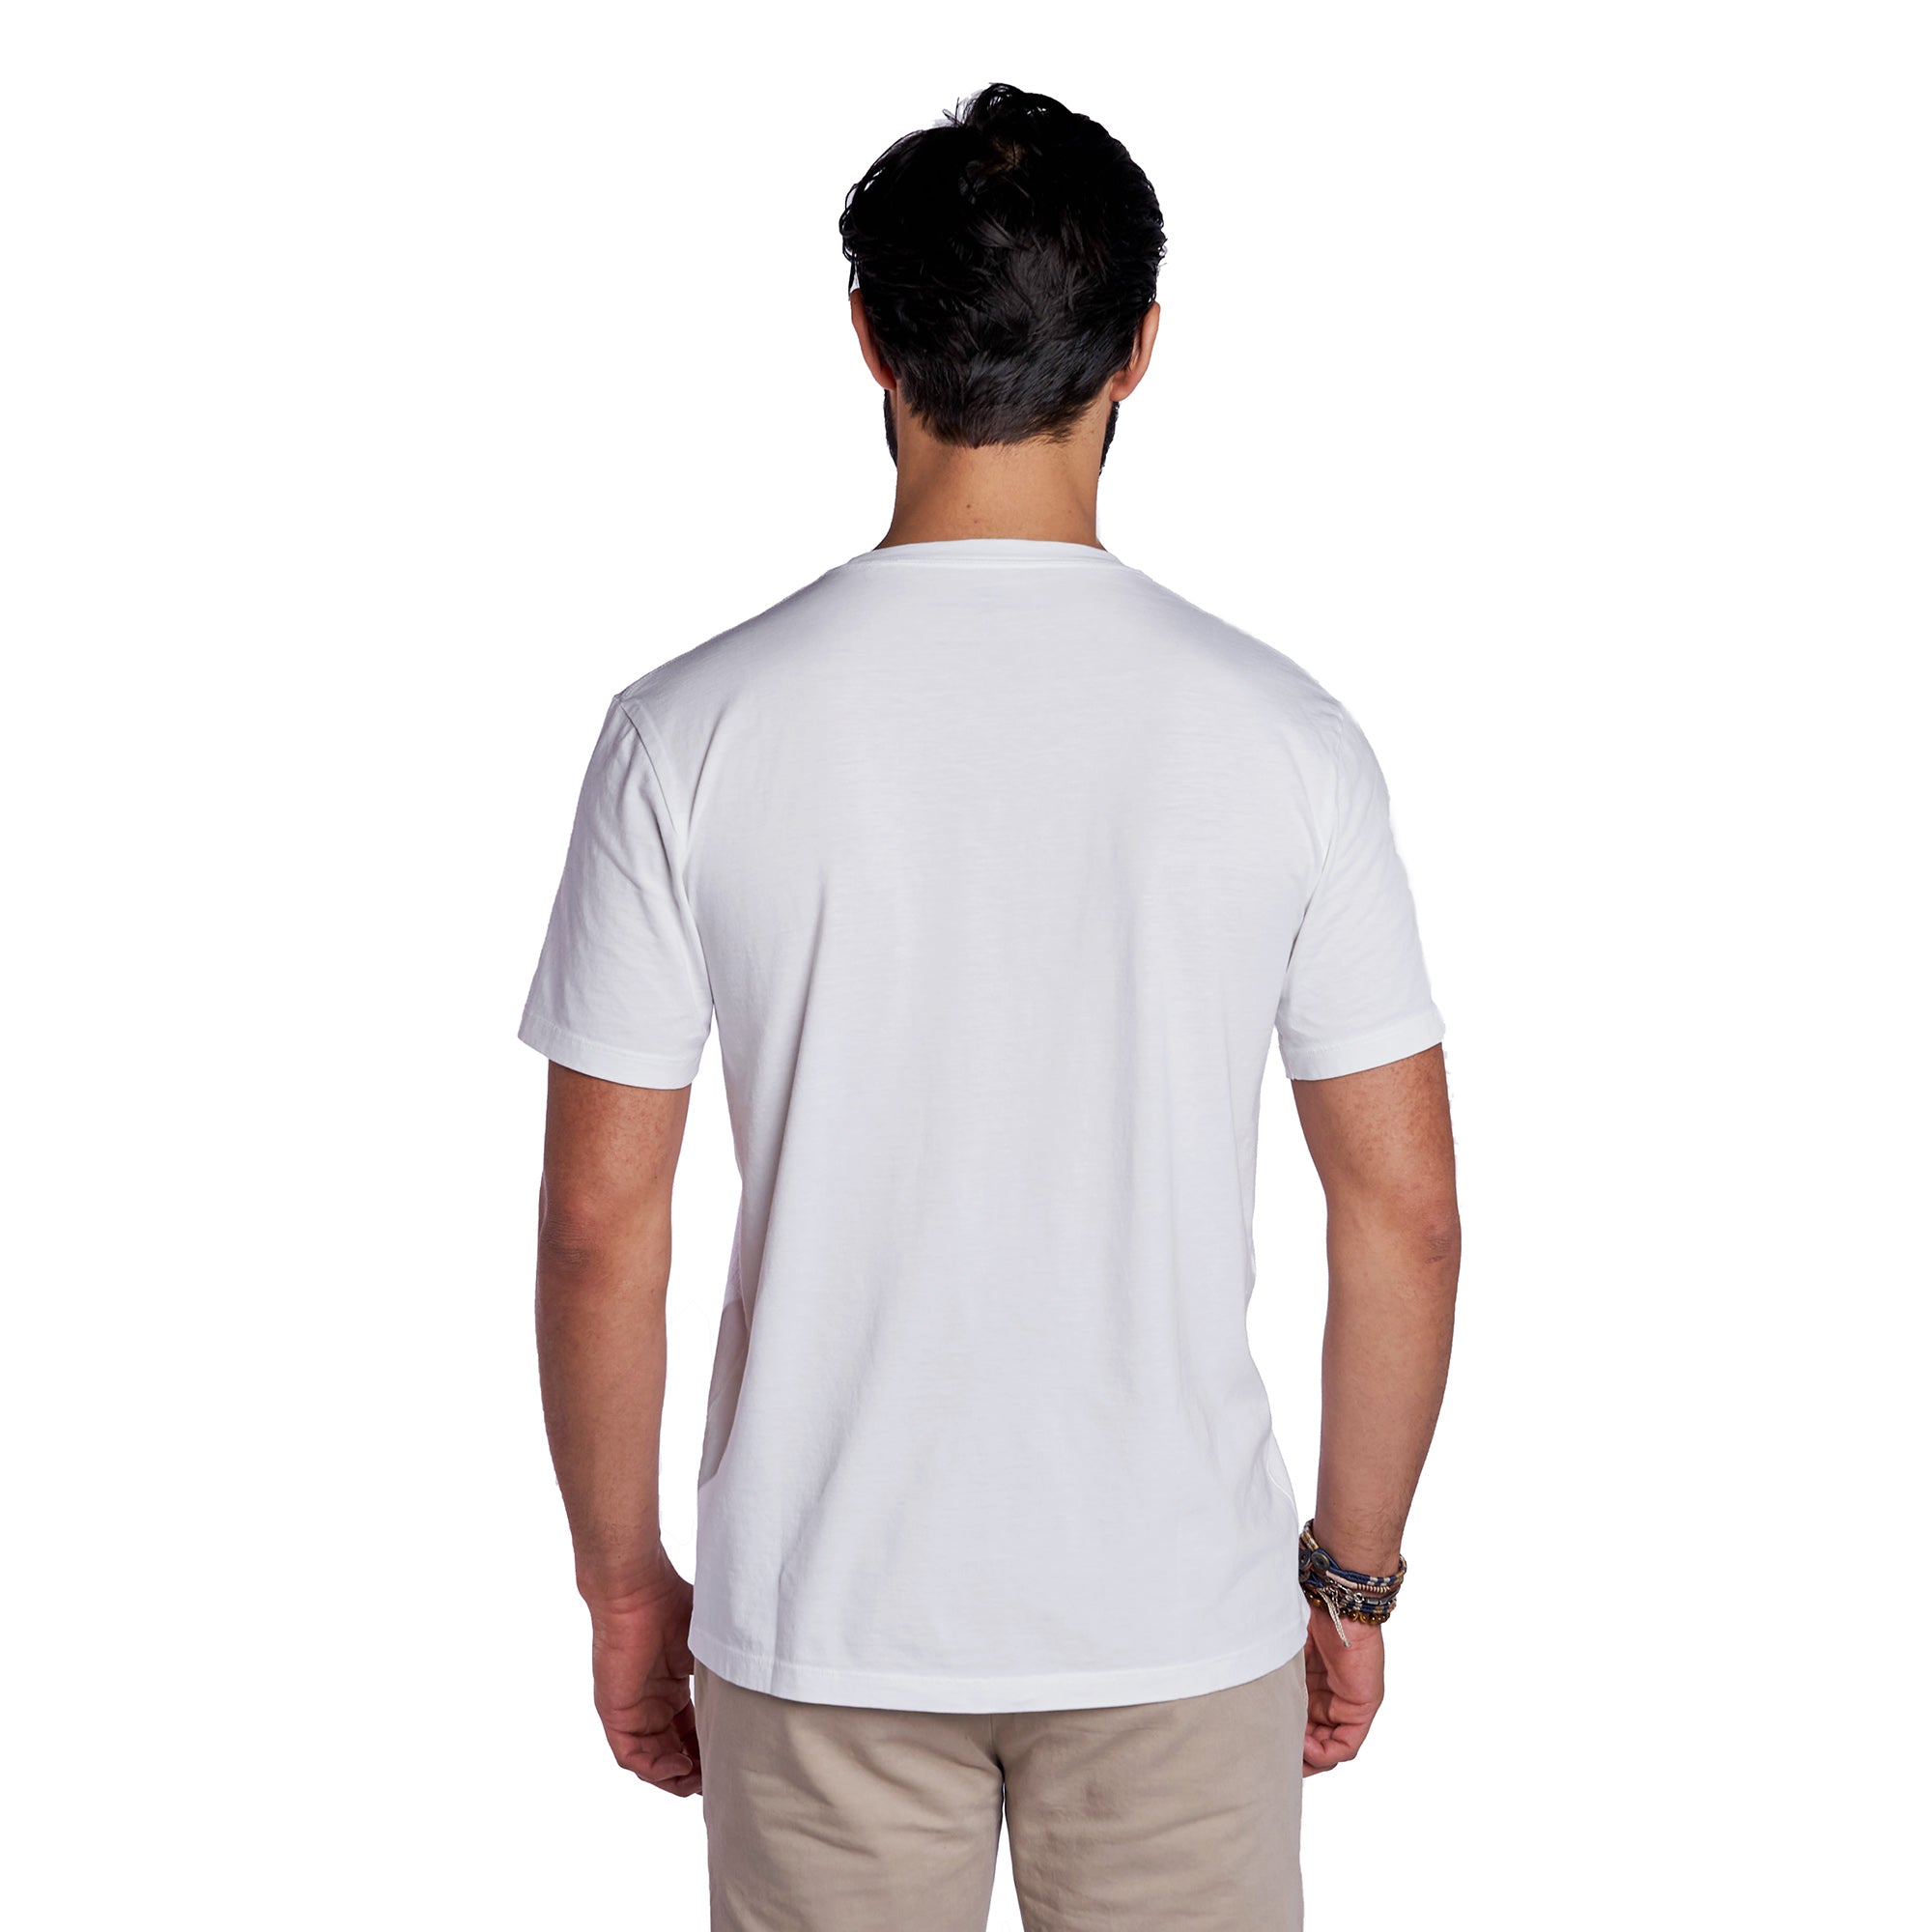 Vintage Crew T-Shirt - White